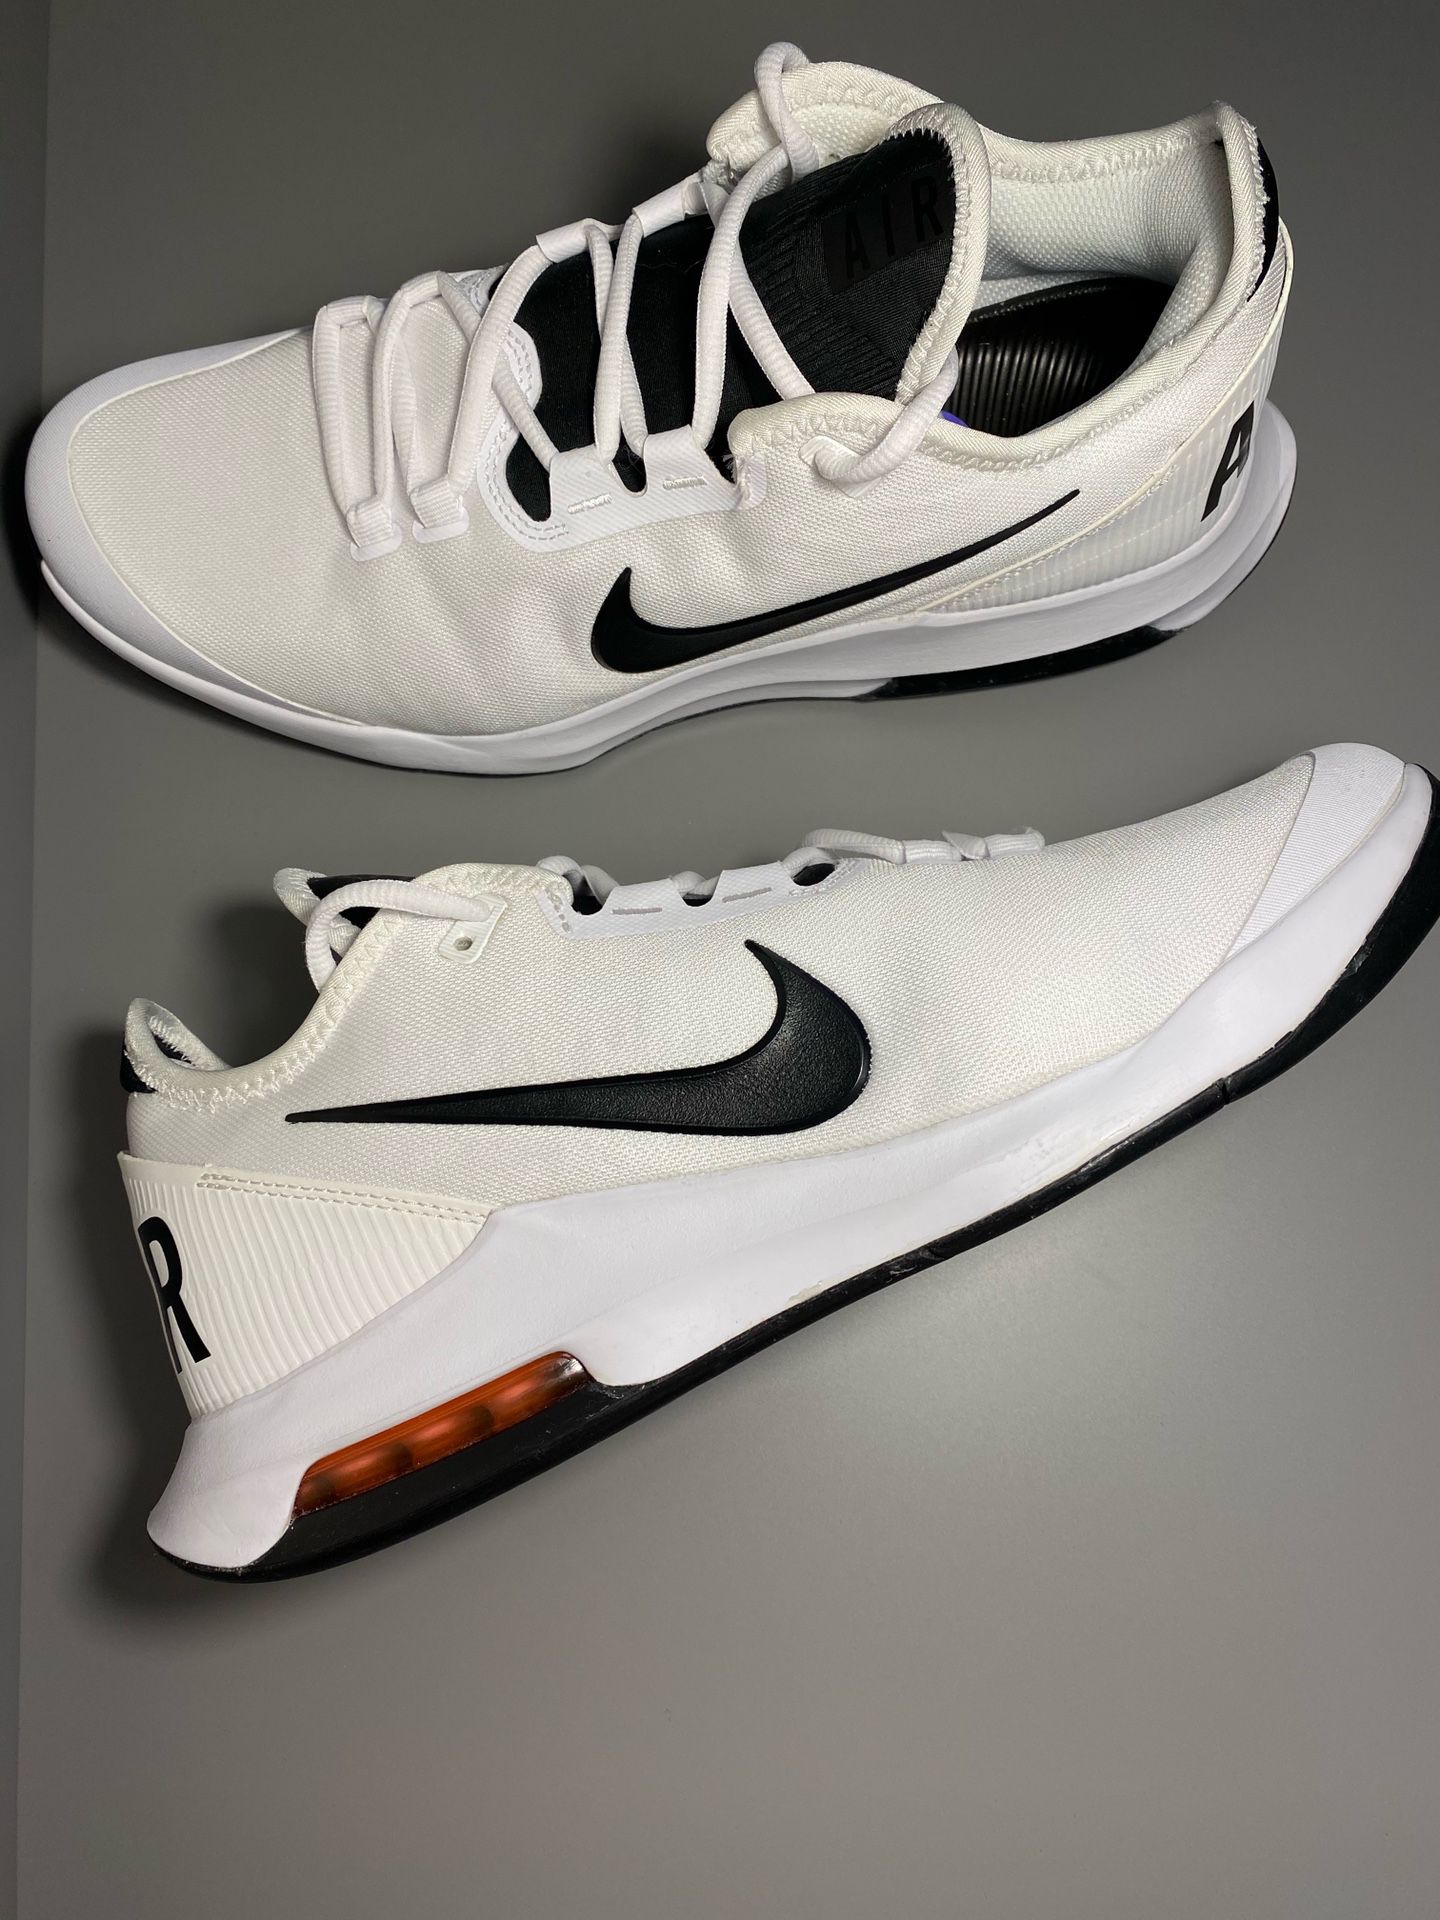 Nike Air Max Wildcard HC Men's New White Black Tennis Shoes AO7351-100 size 11.5